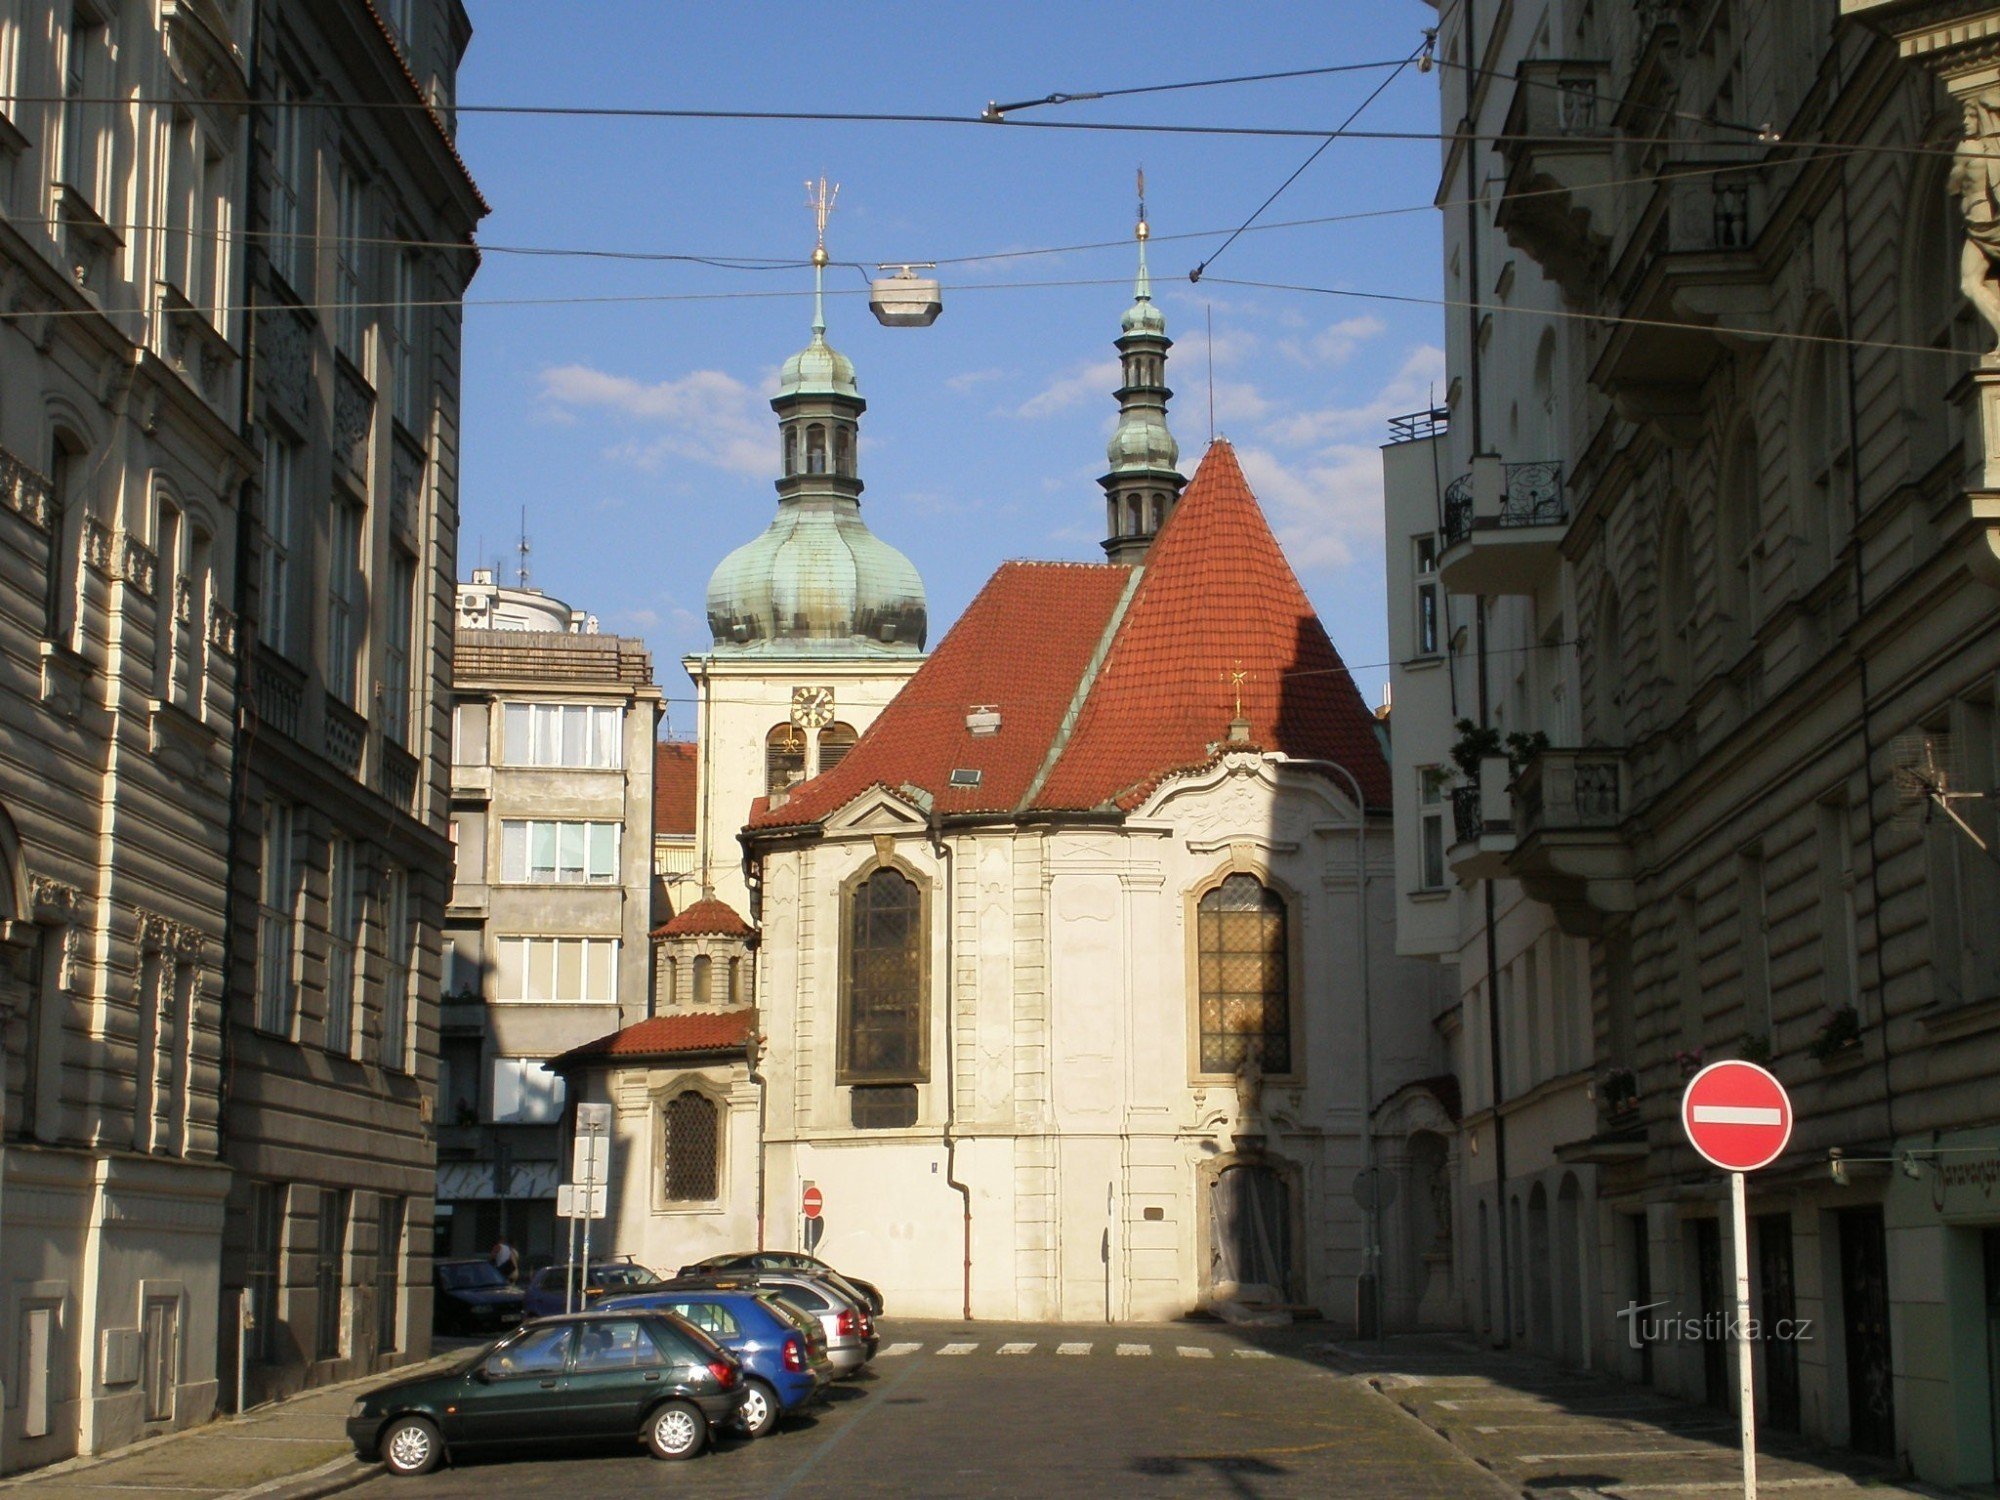 New Town - Church of St. Vojtěch